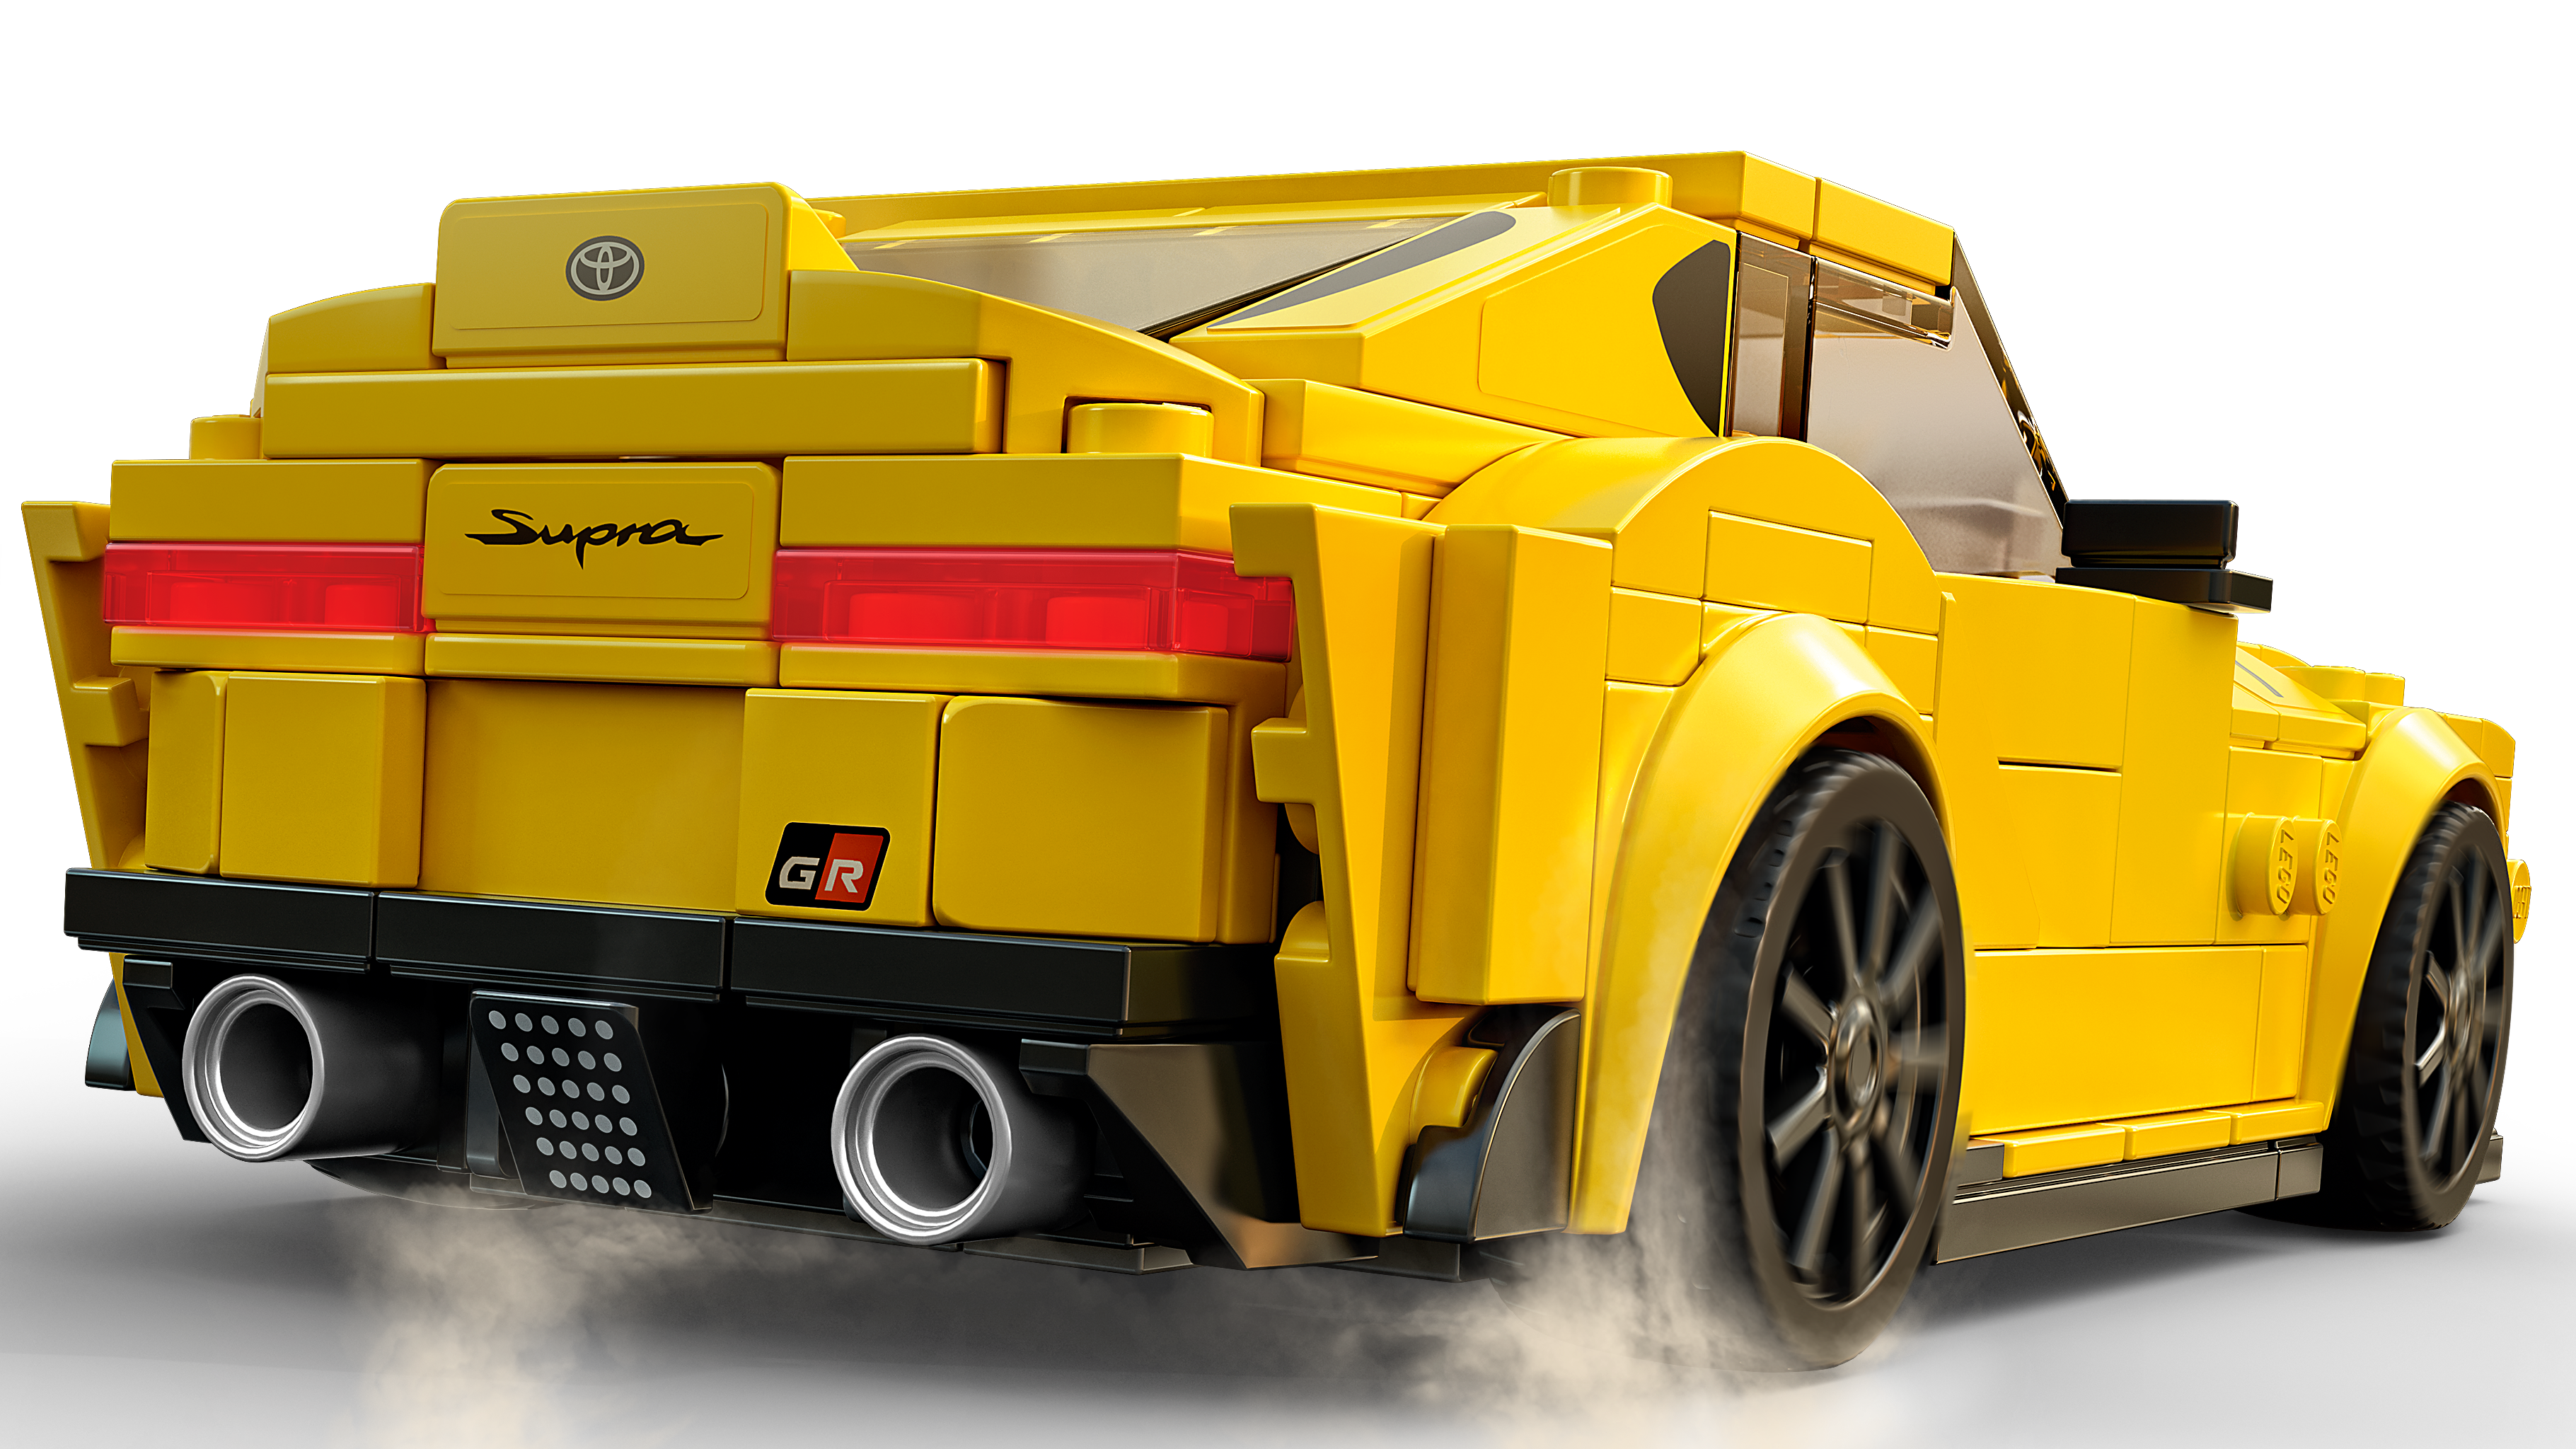 Full-size Lego Toyota GR Supra revealed - Toyota UK Magazine